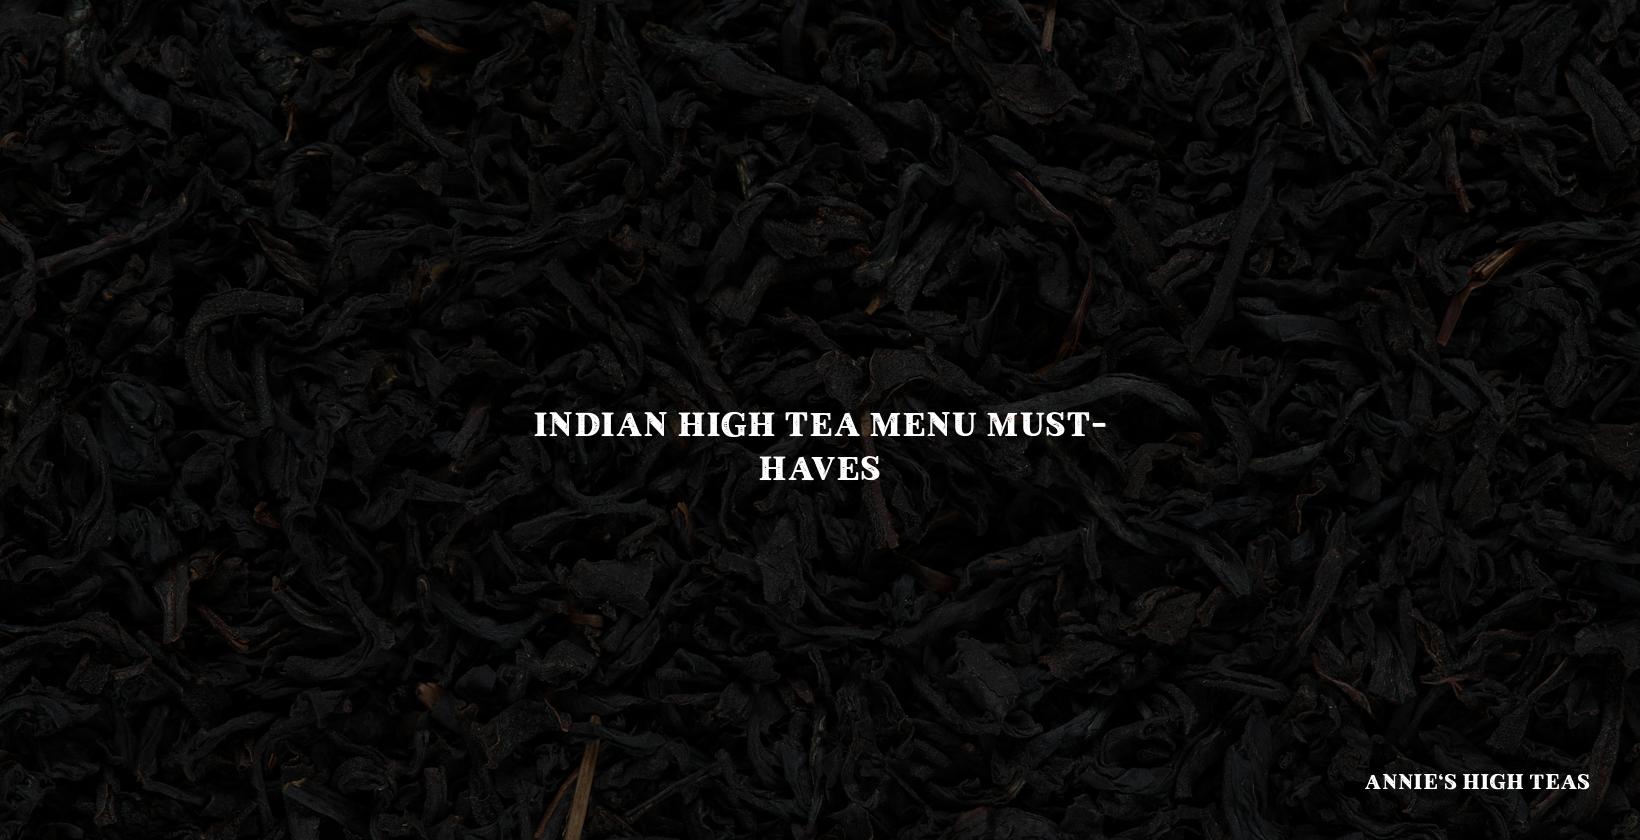 Indian High Tea Menu Must-Haves